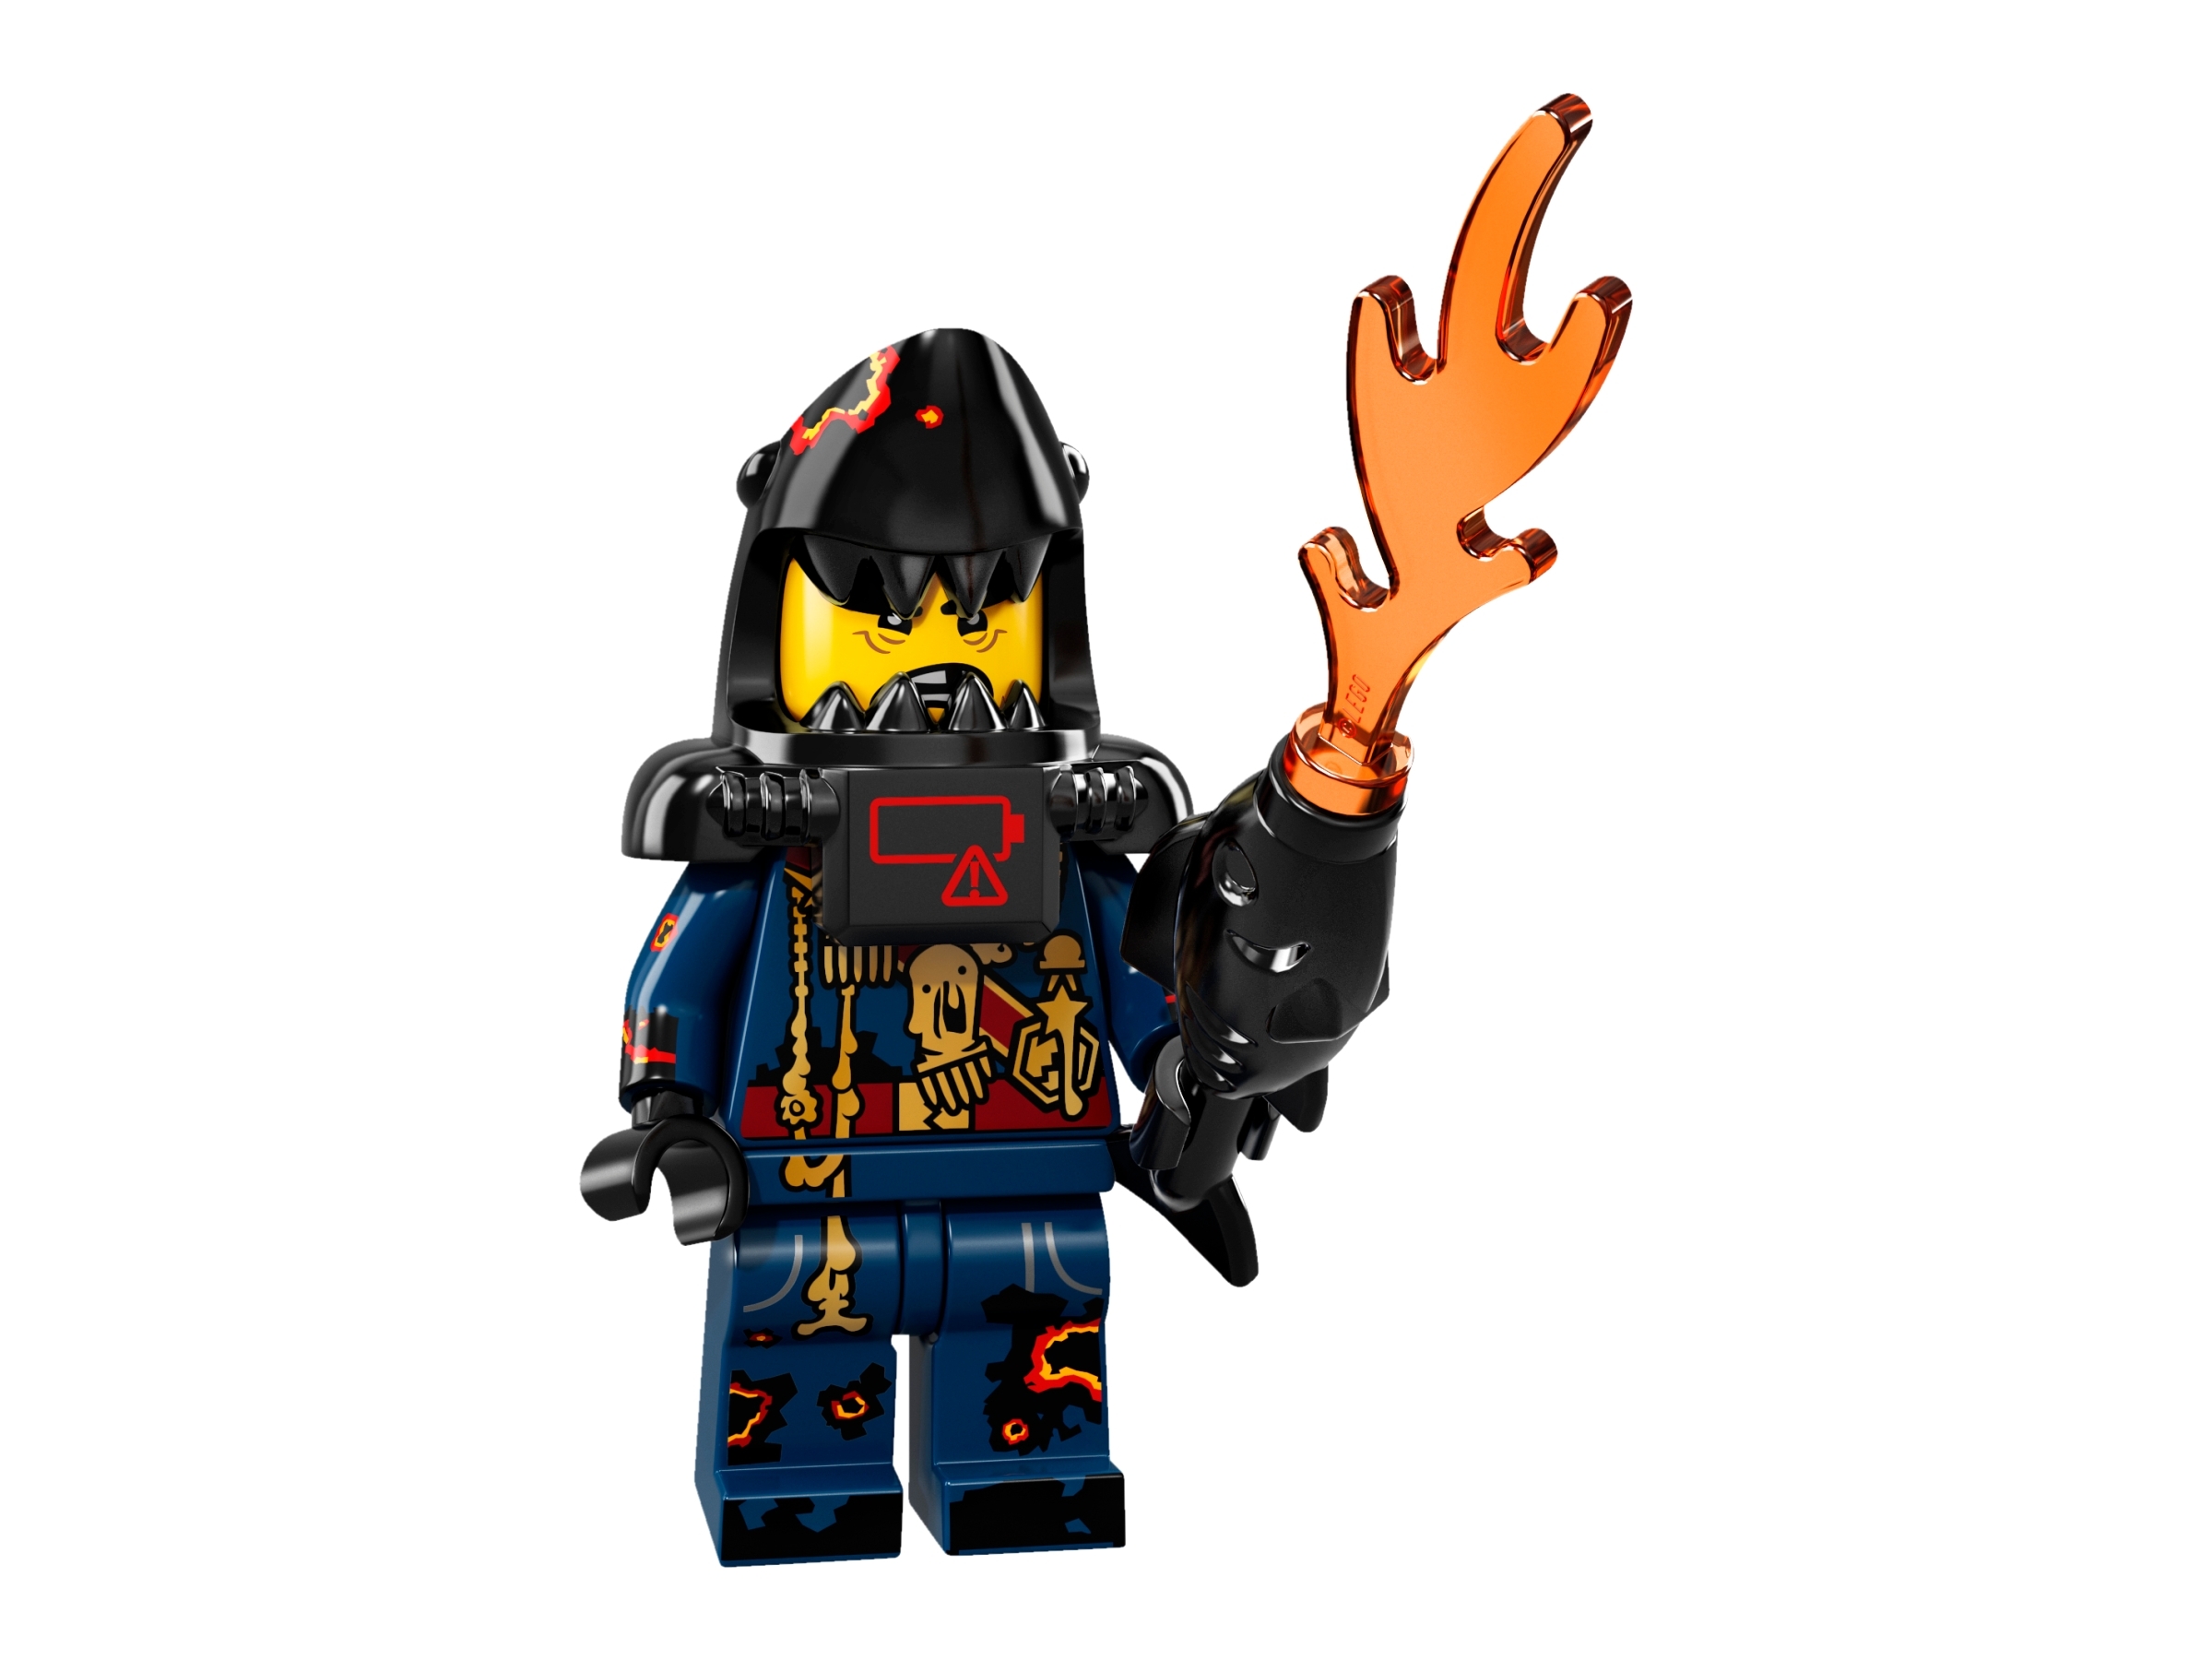 Lego Ninjago Movie Minifigures Choose Your Mini Figure GENUINE 71019 